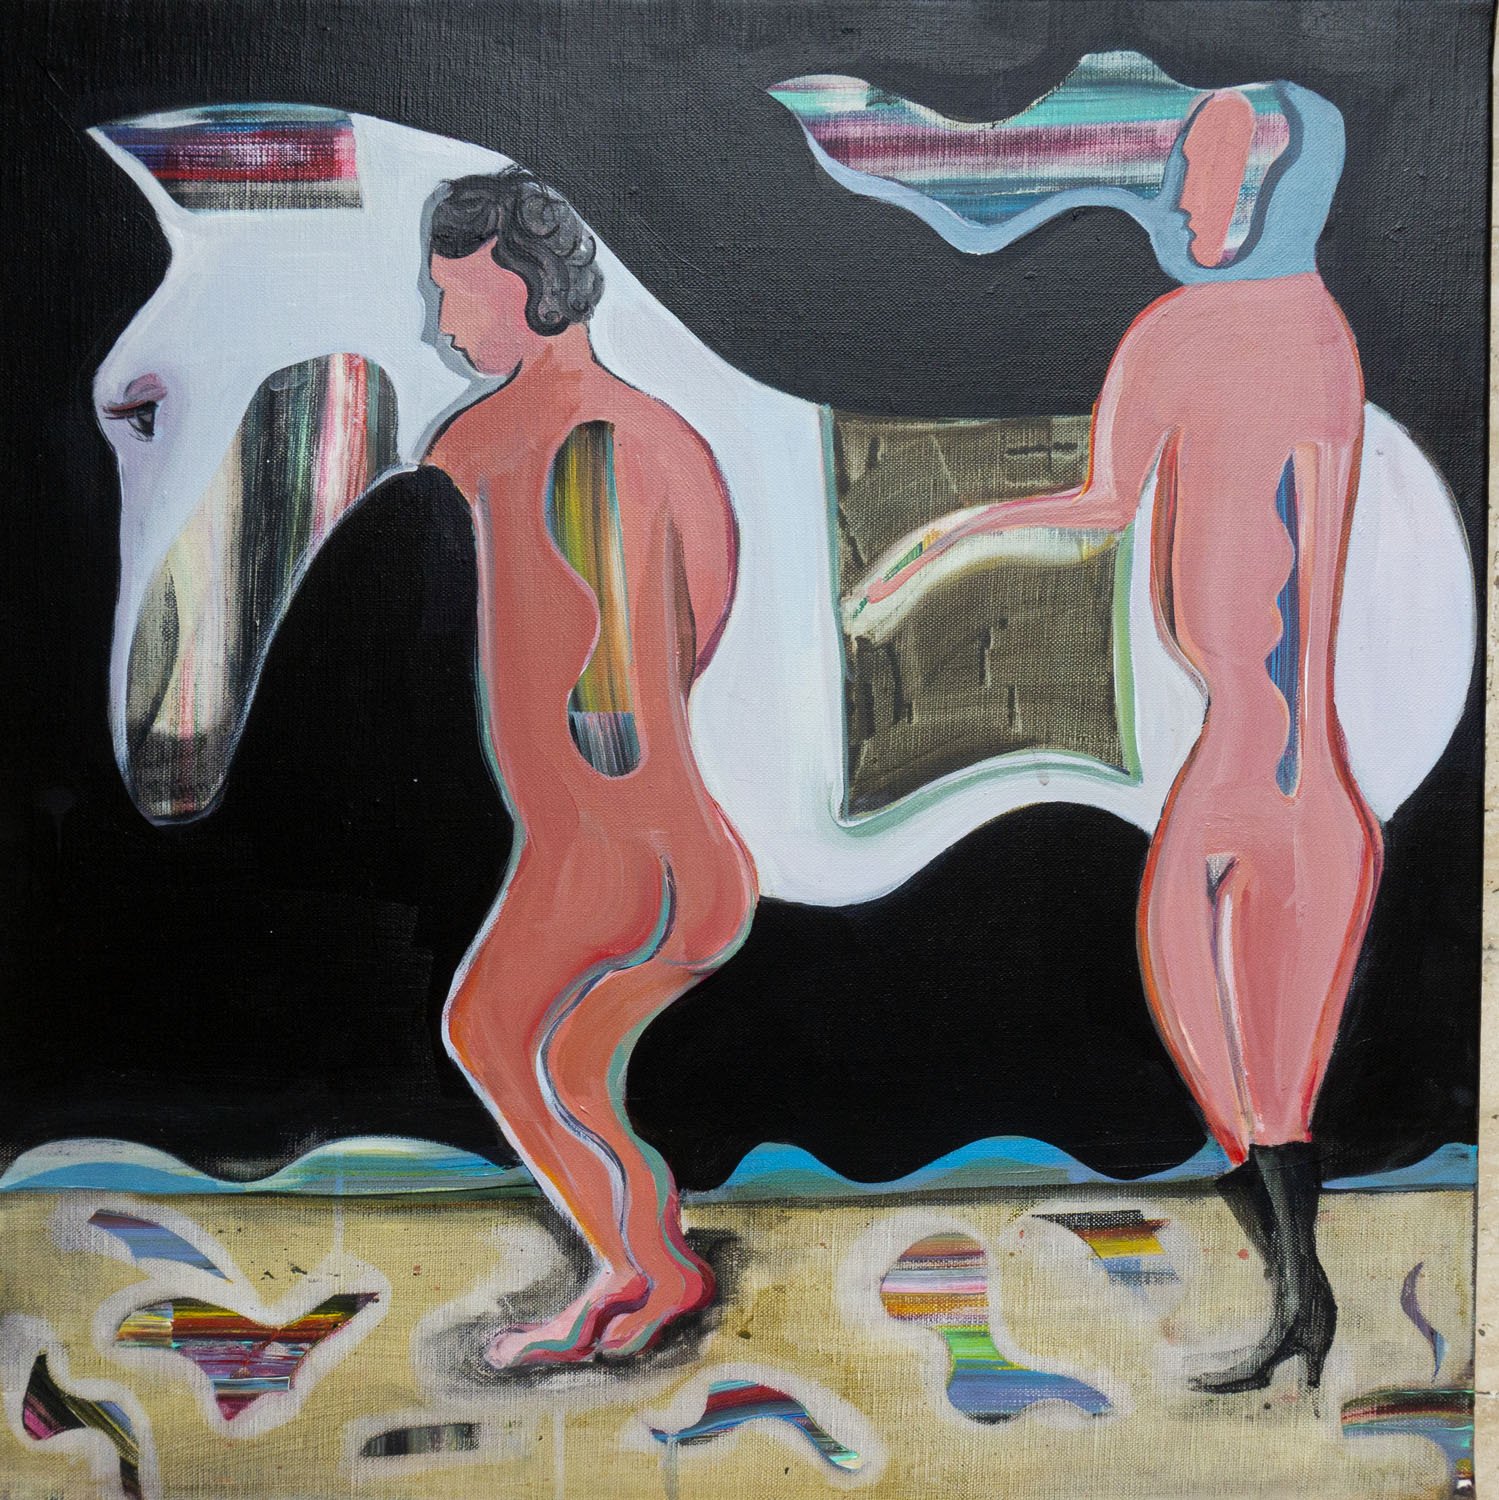  Horse whisperers at night 2021 Acrylic on canvas 50 x 50cm 